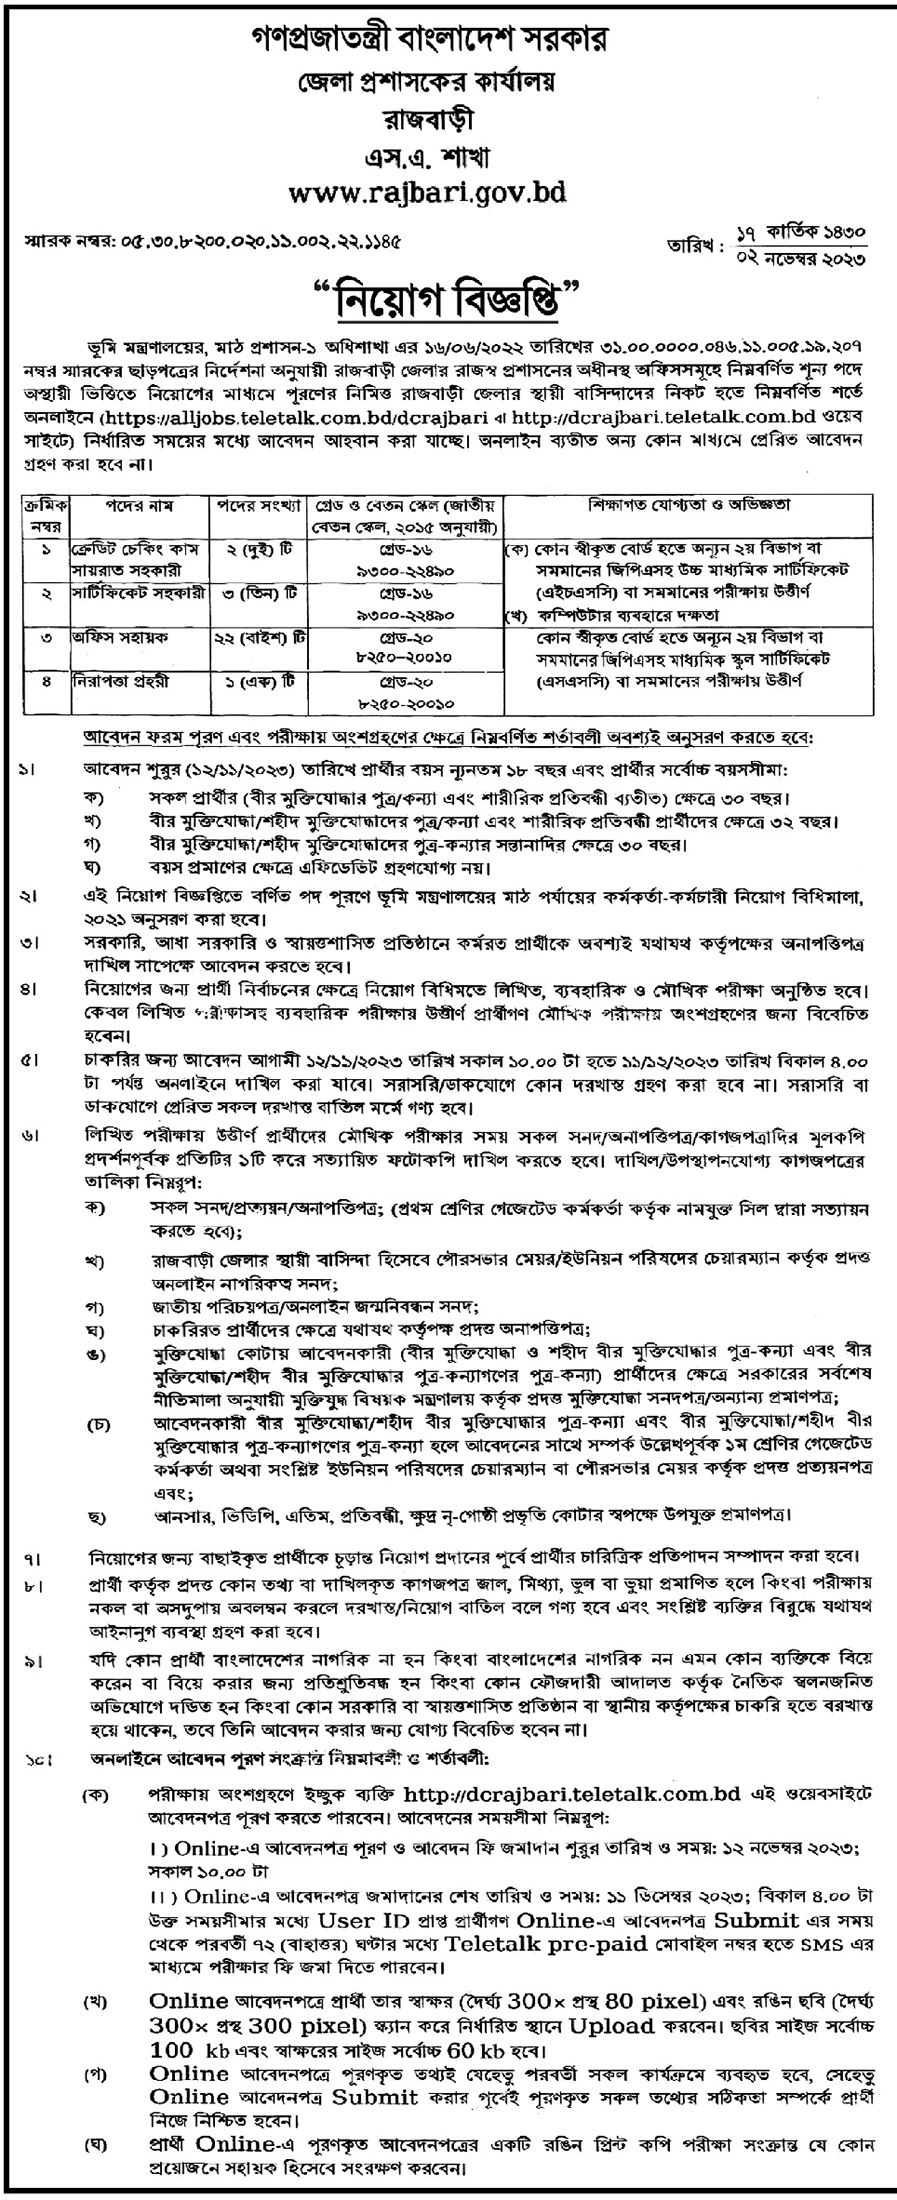 Rajbari DC Office Job Circular Image 01